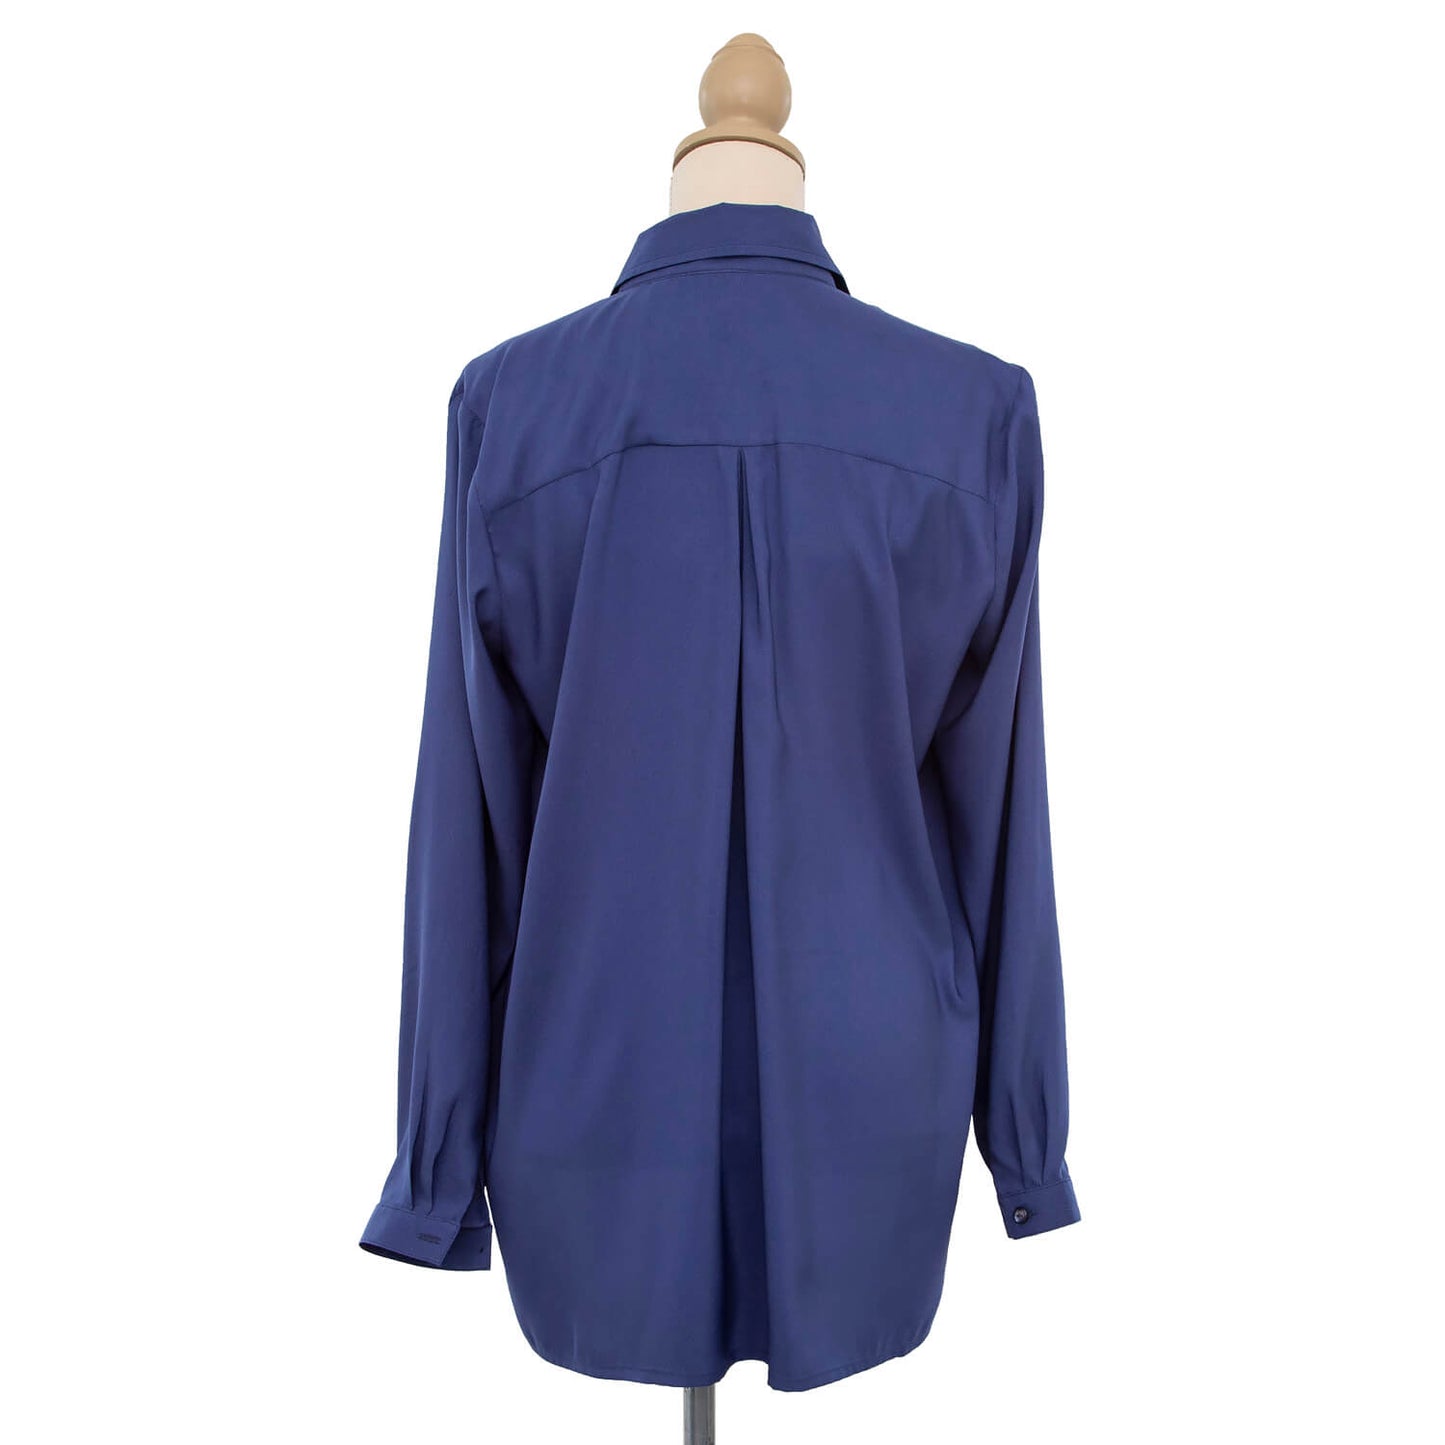 blueberry manhatten shirt back by seahorse silks